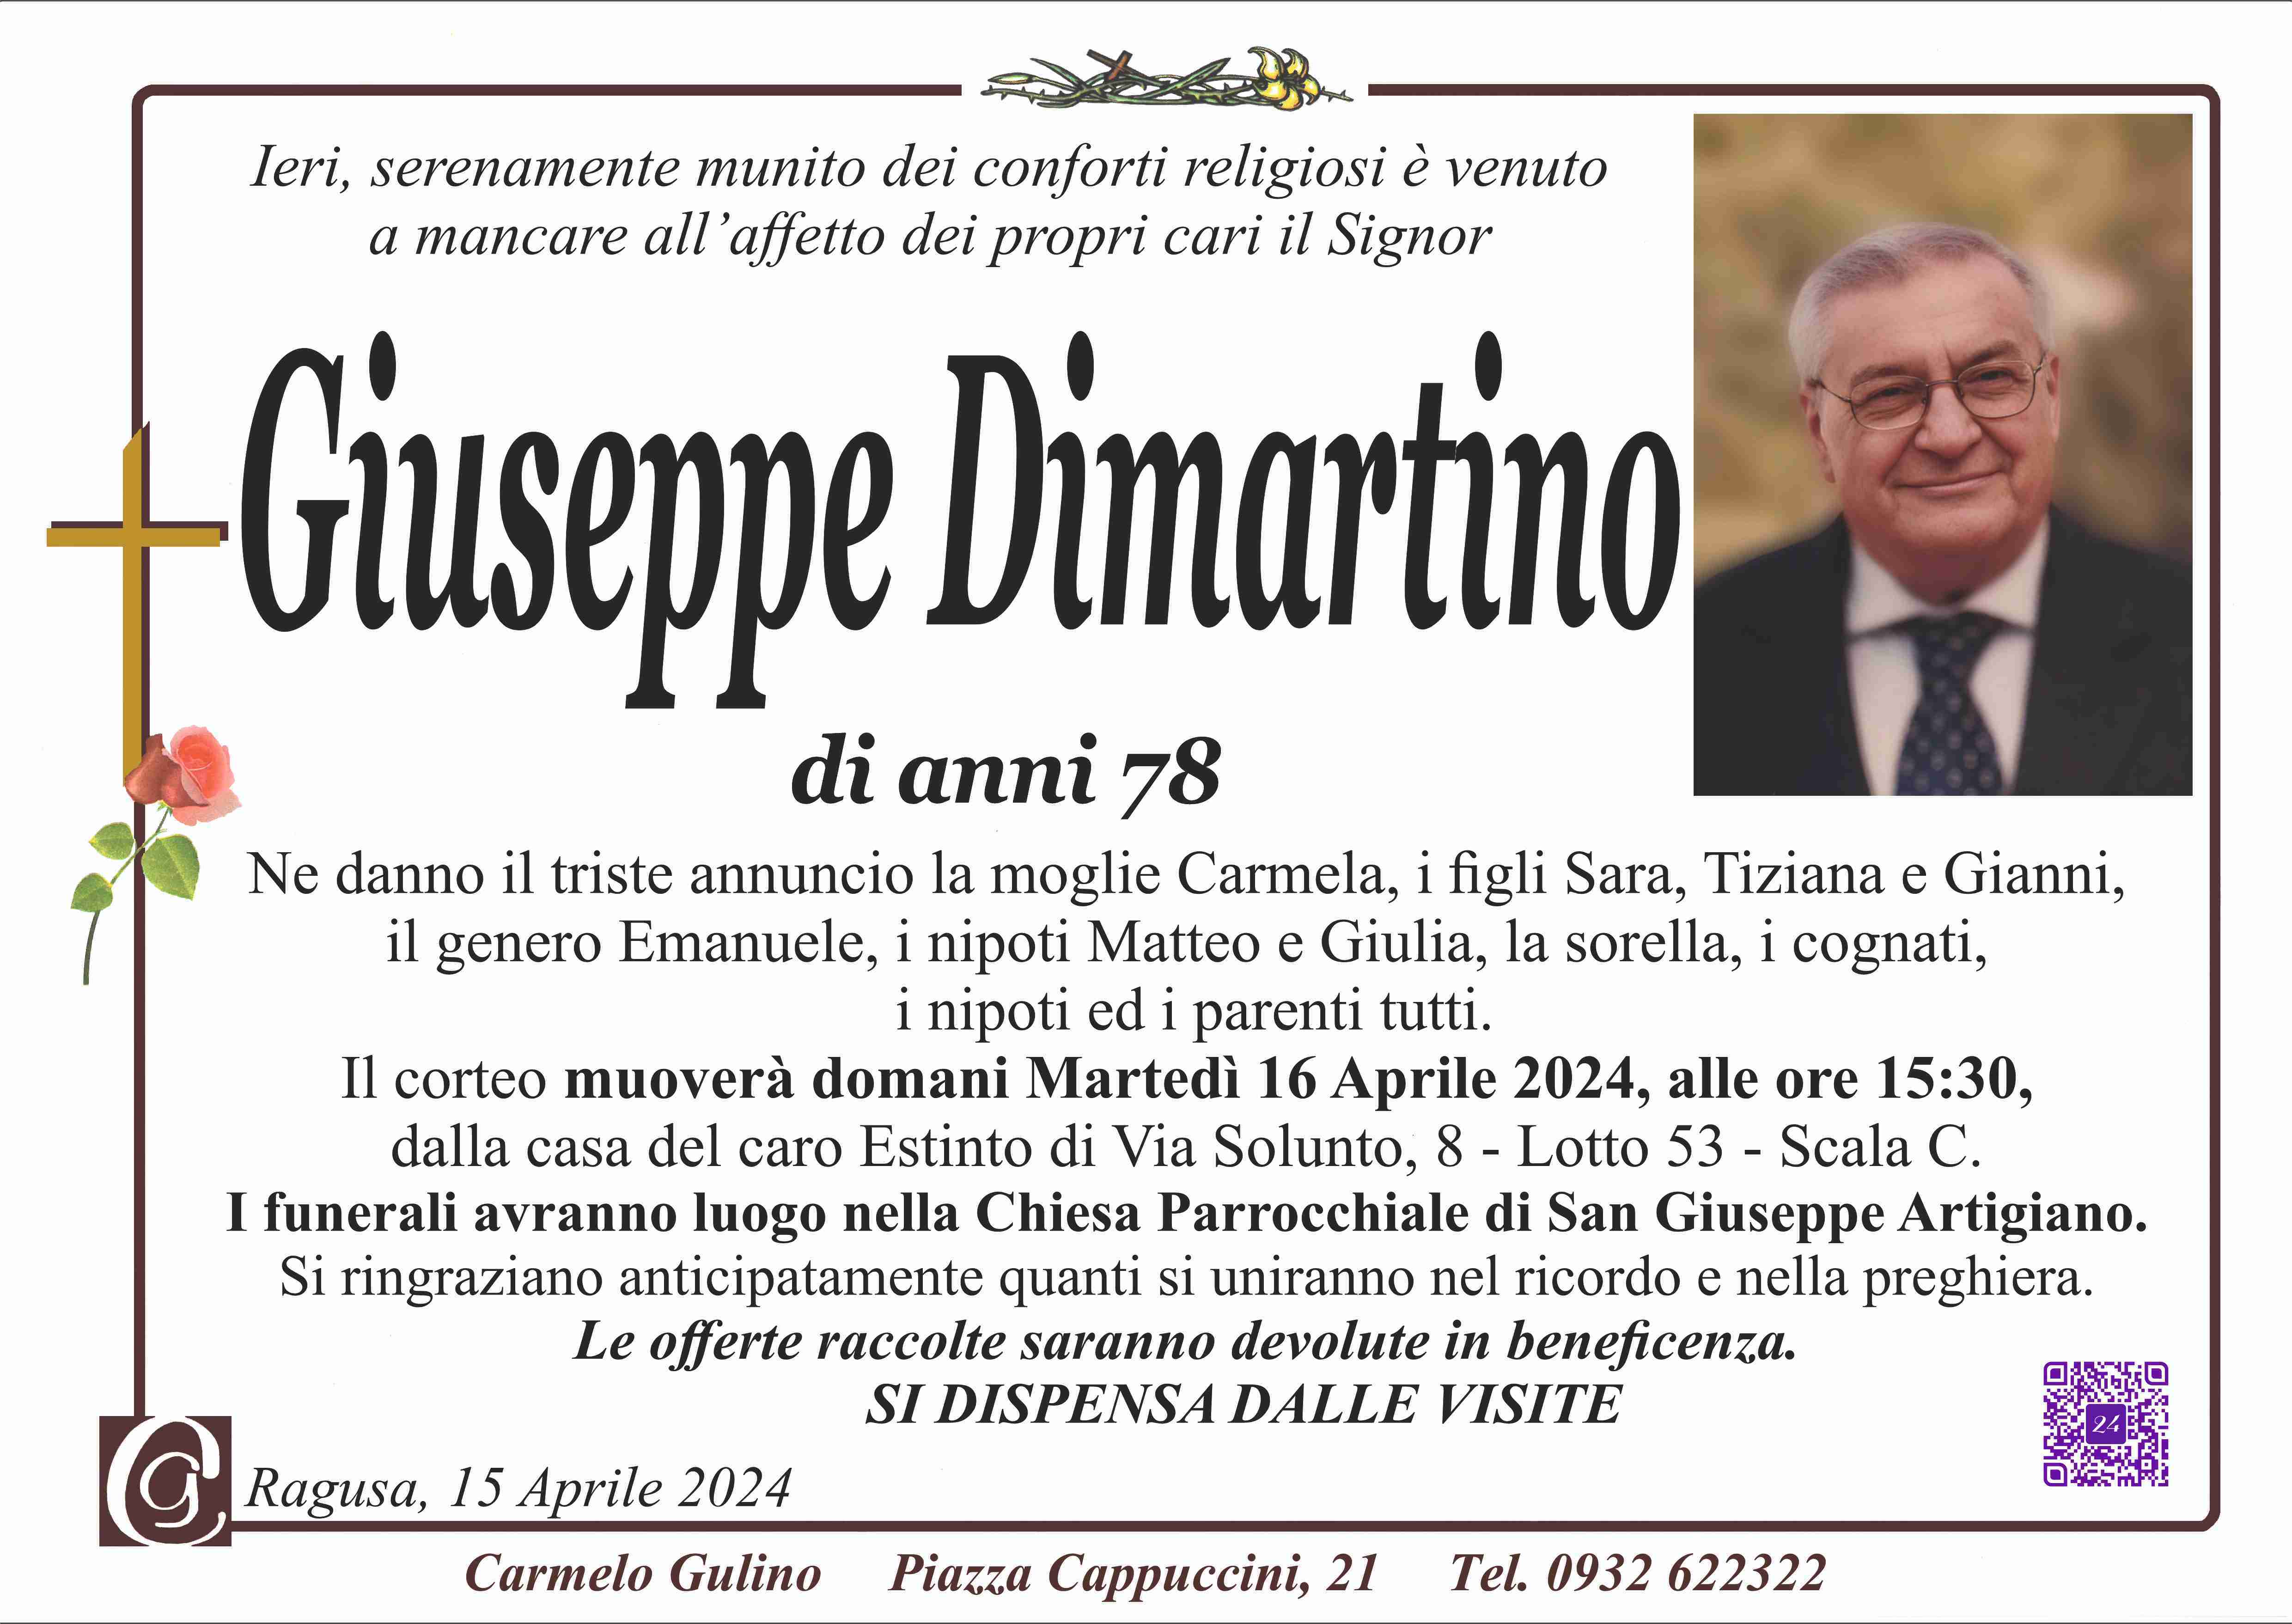 Giuseppe Dimartino